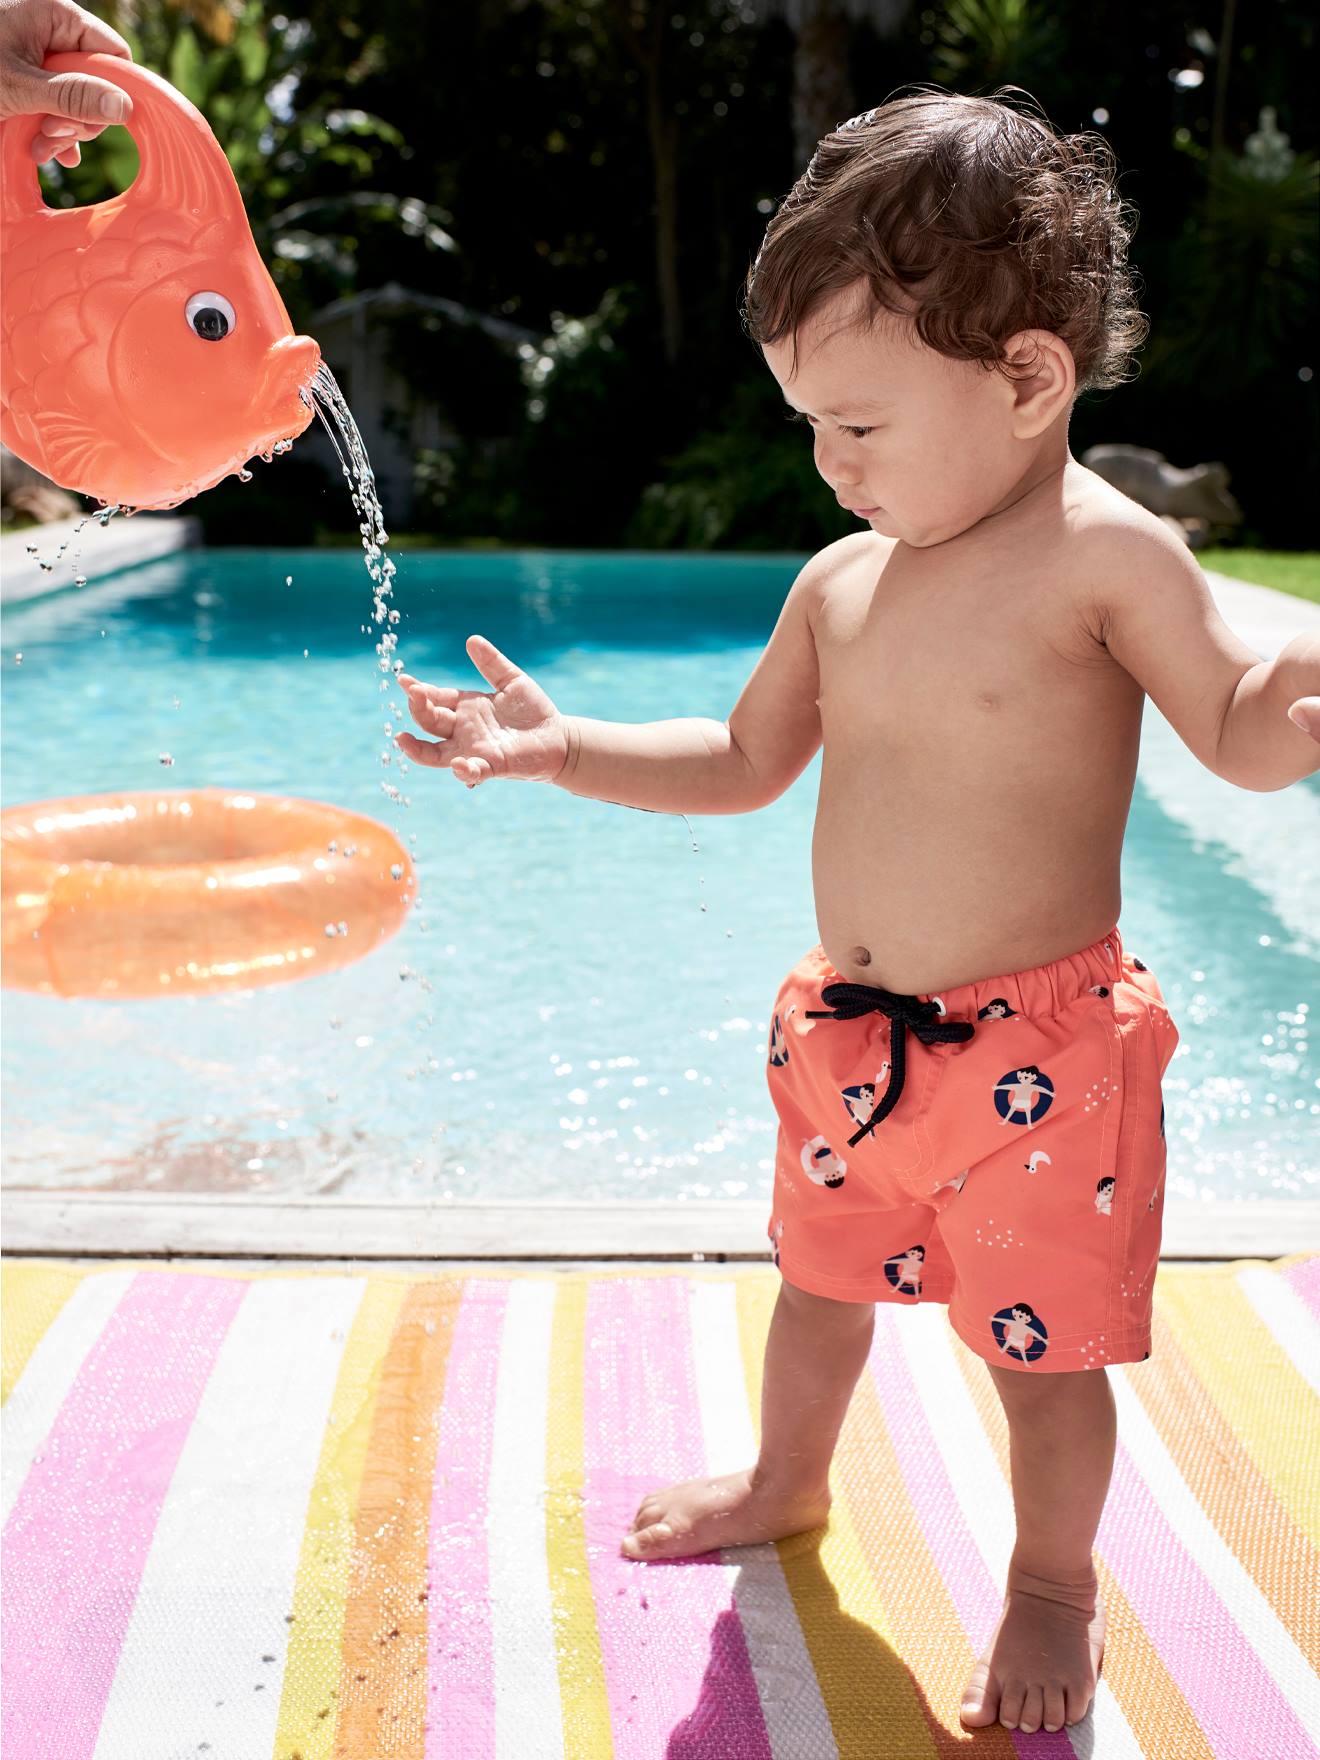 Zerototens Boys Swimming Shorts,1-6 Years Old Toddler Kids Beach Trunk Adjustable Waist Quick Dry Swimwear Boardshorts